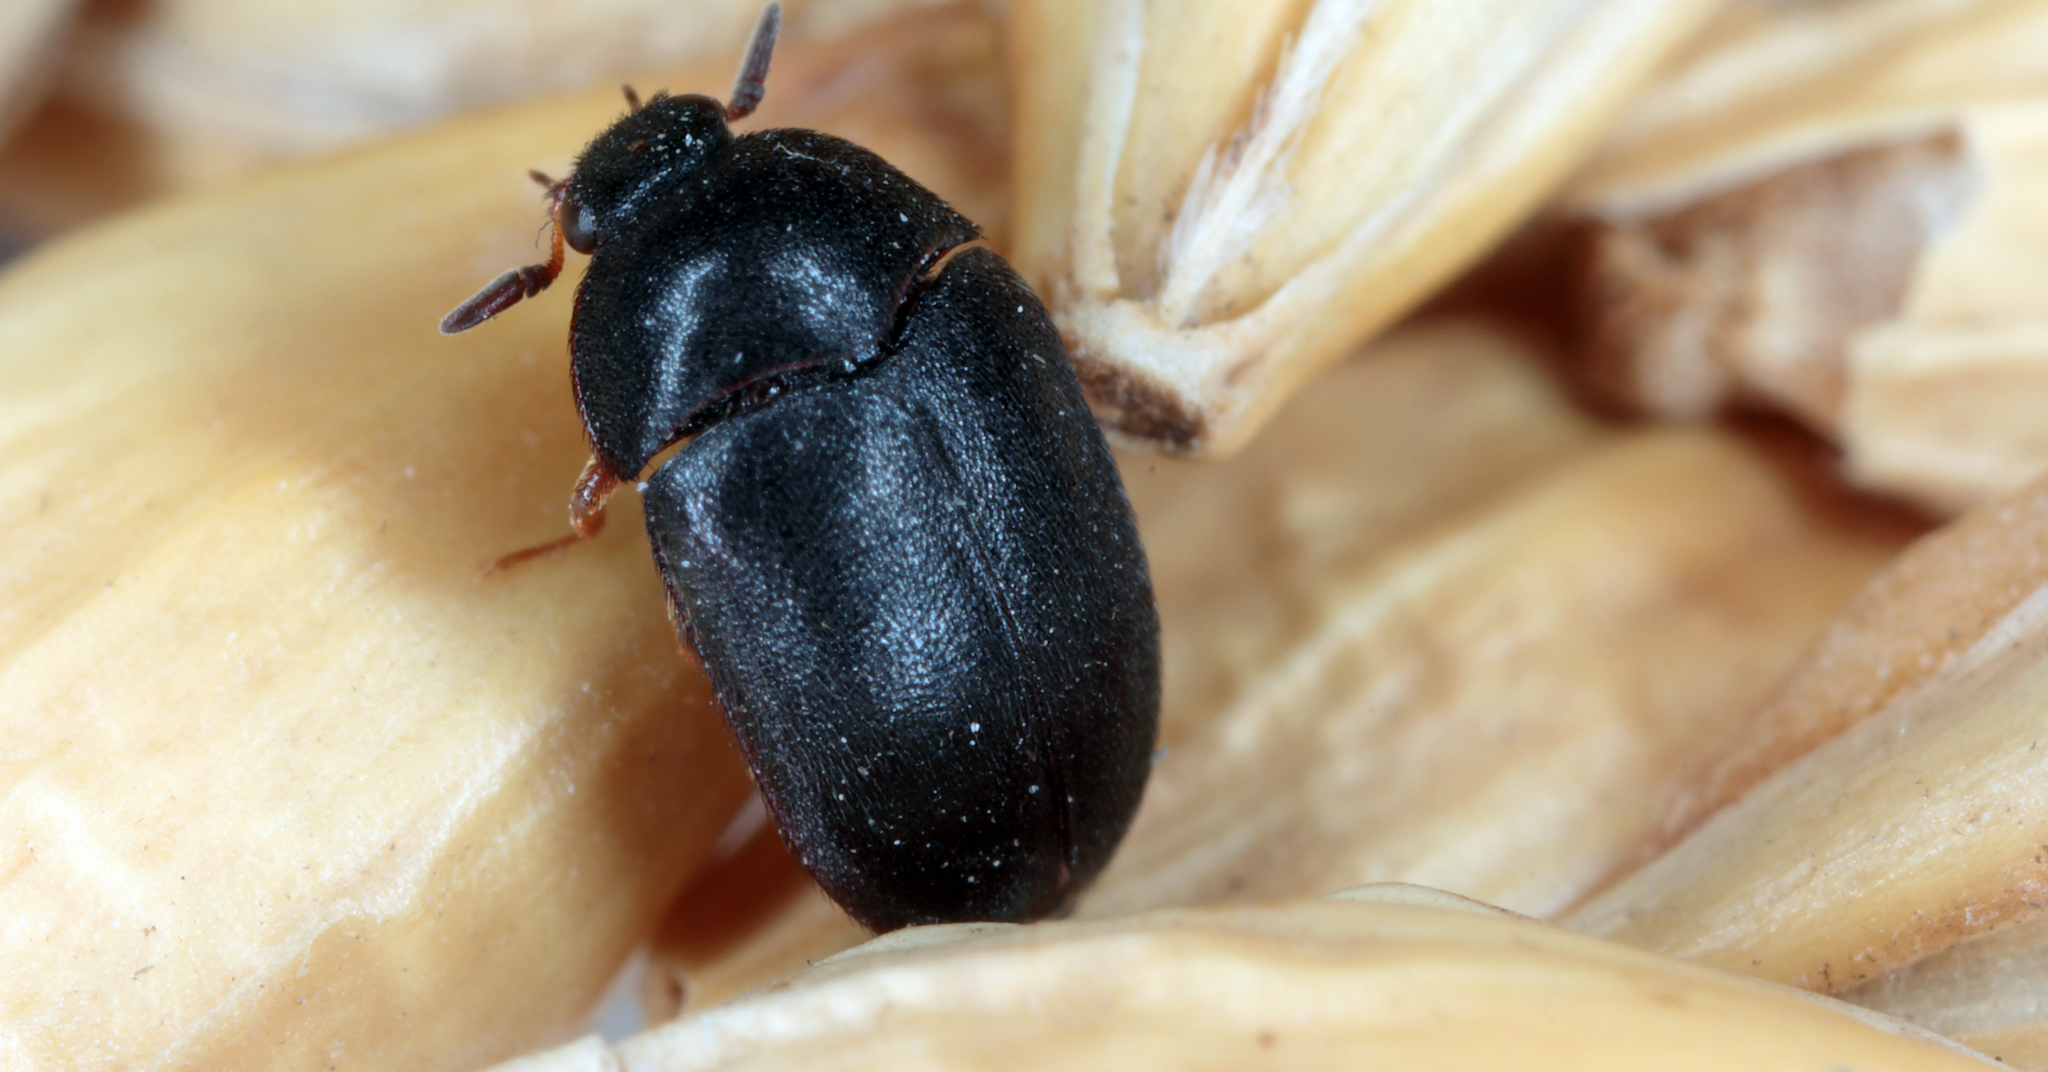 Identifying a Black Carpet Beetle